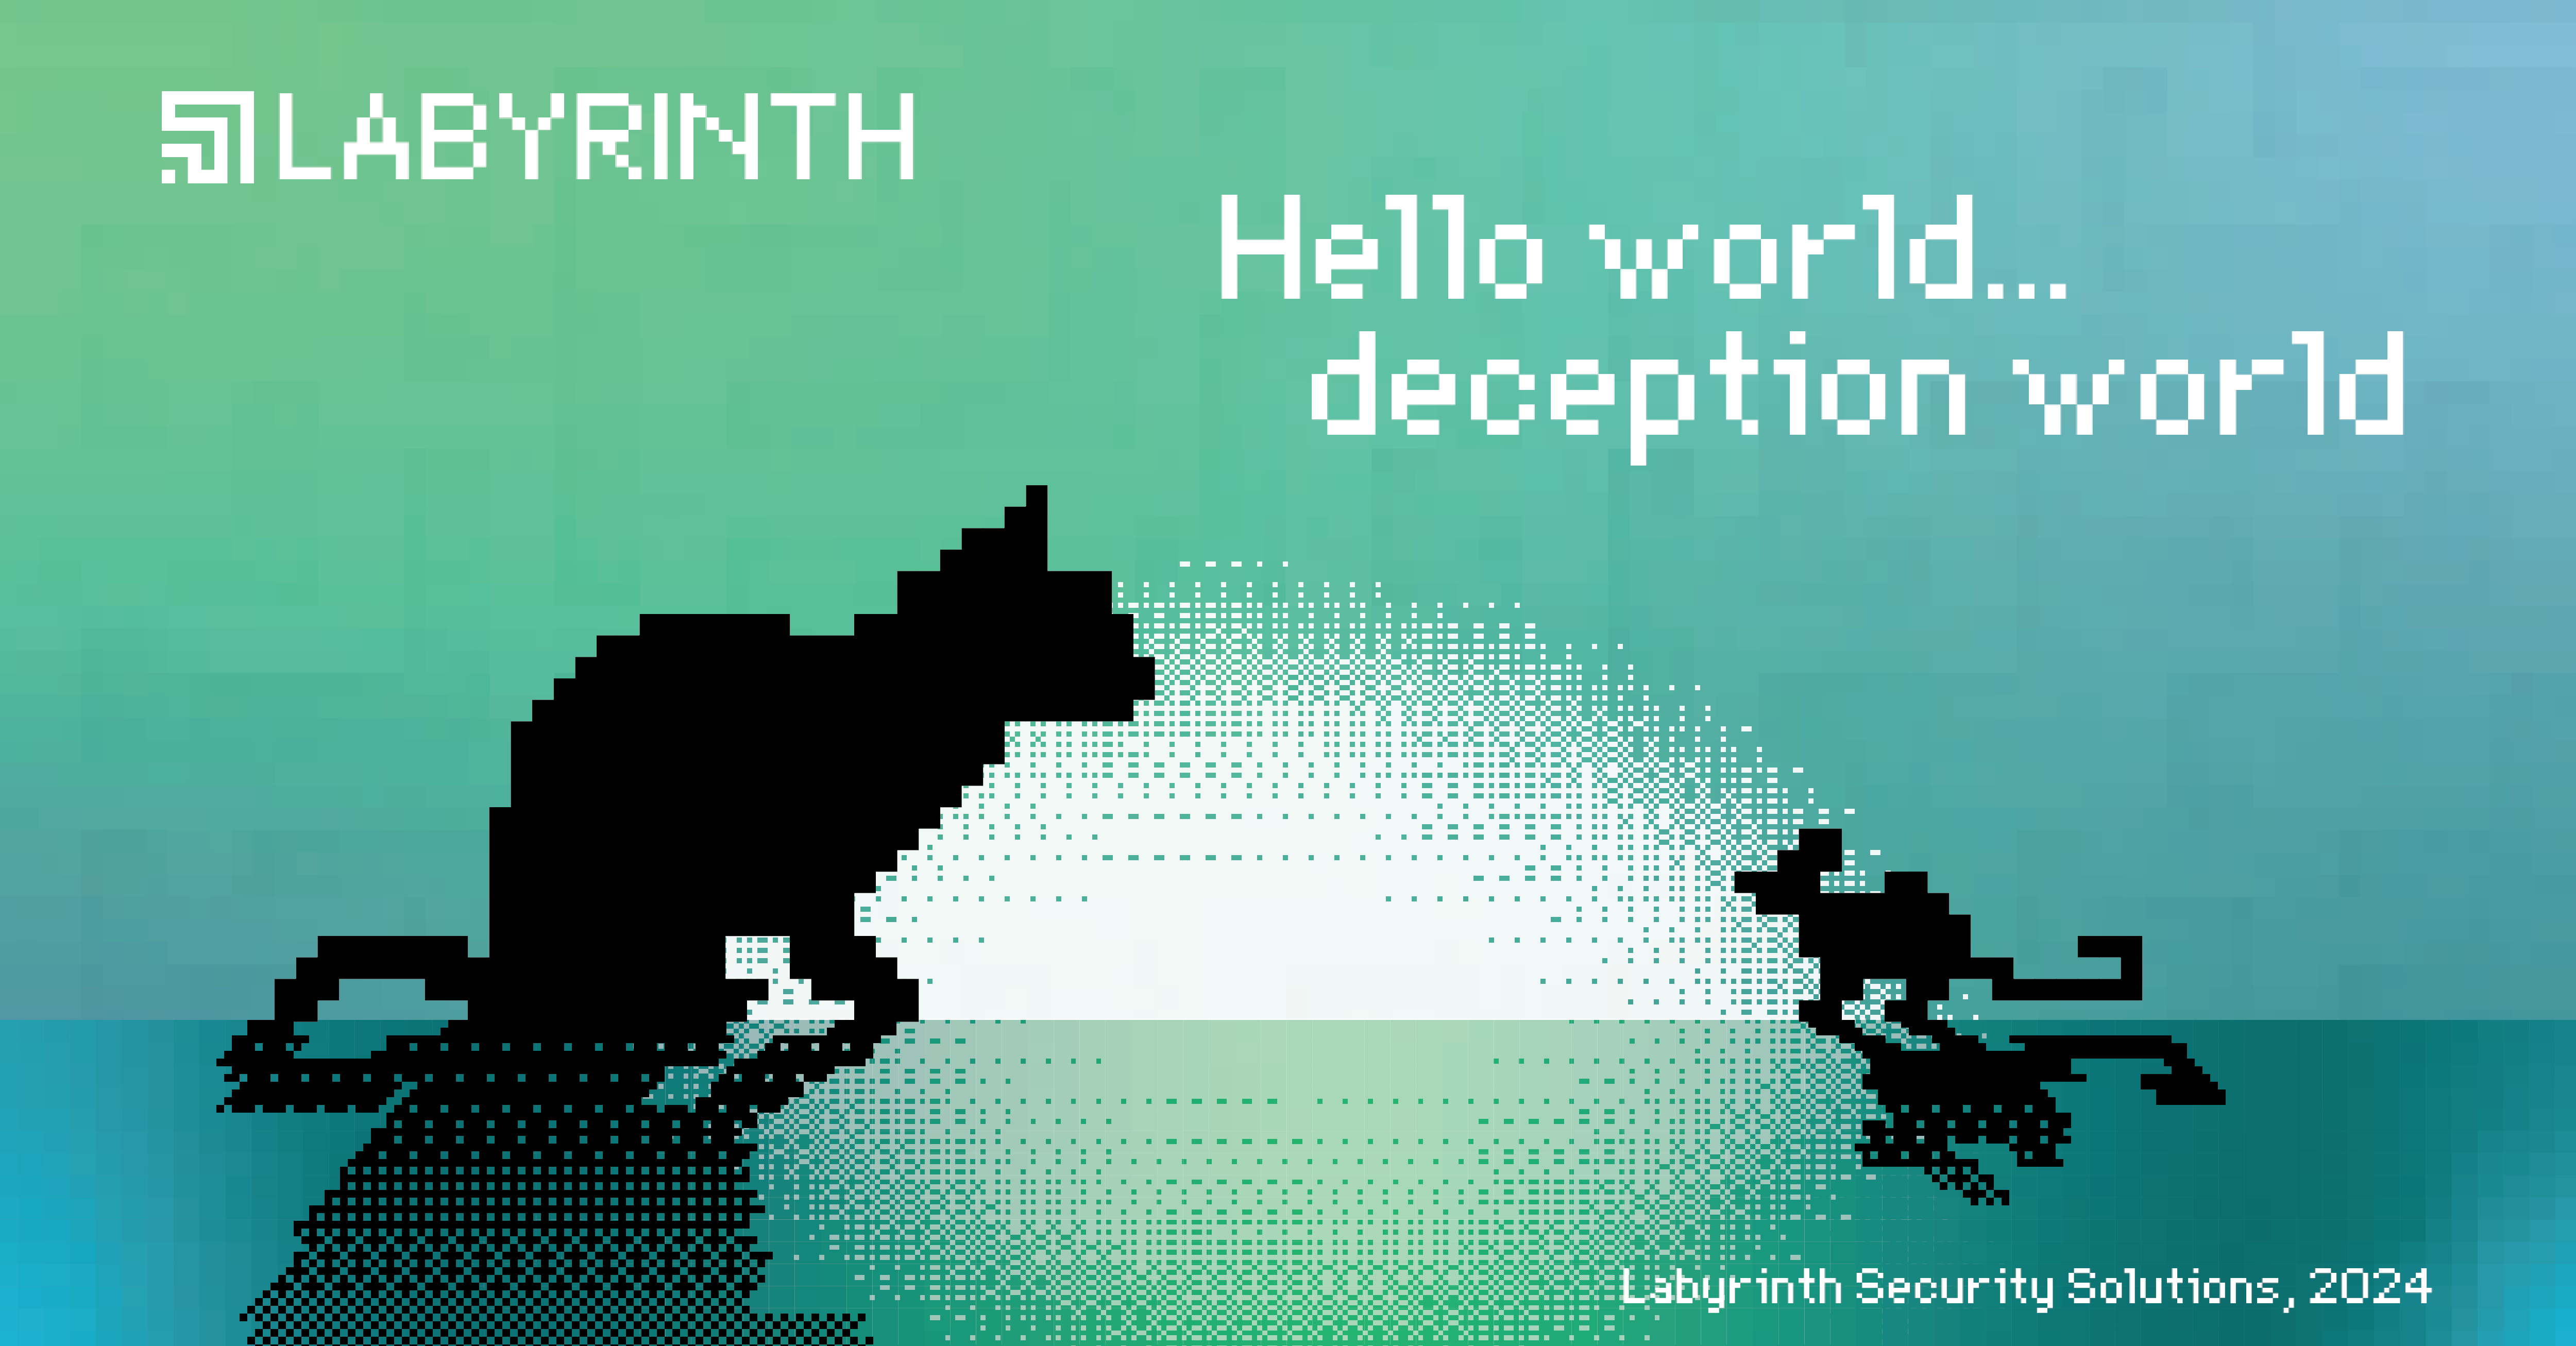 Hello World… deception world